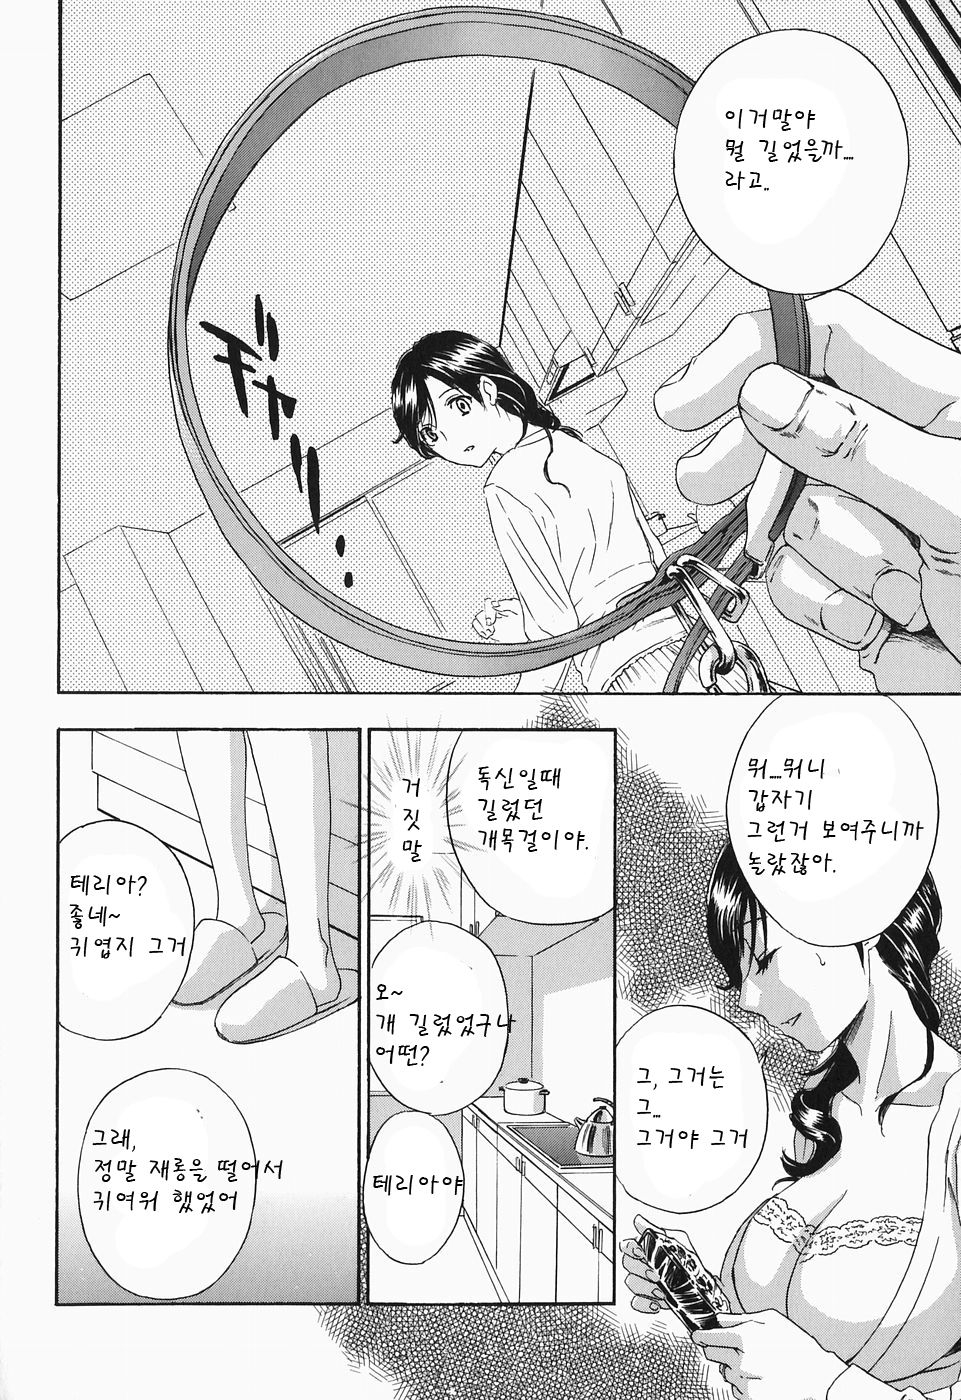 [Drill Murata] Ikumade... Piston! - Do the piston until breaking [Korean] 13